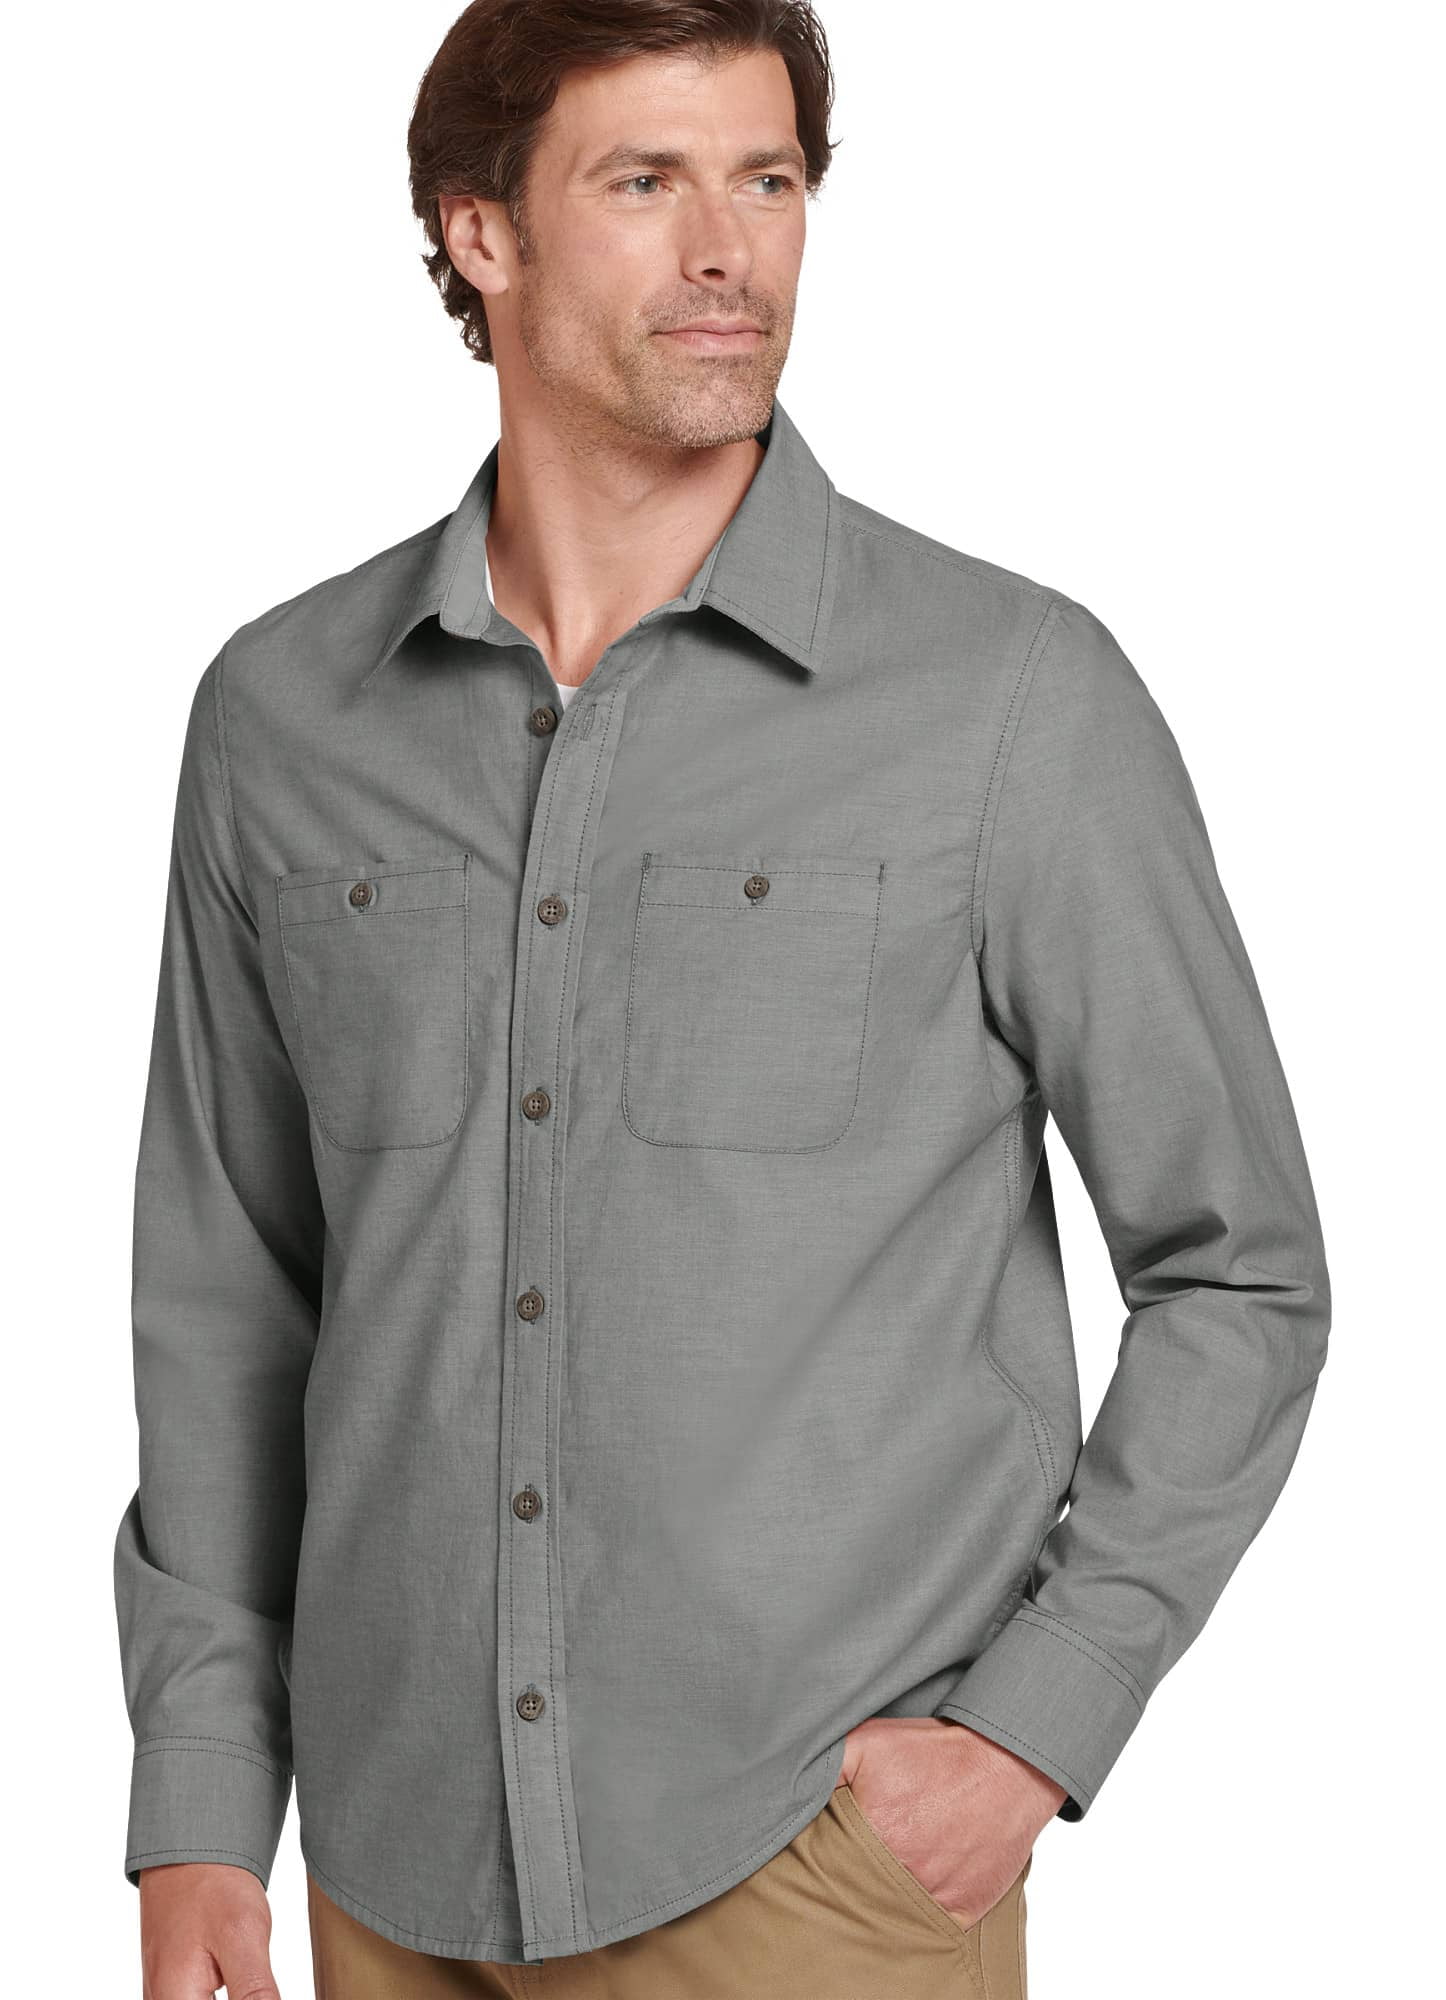 JIOEEH Button up Shirt Men Men's Printed Casual Zippered Long Sleeved Shirt  Athletic Long Sleeve Shirt Men Fitted